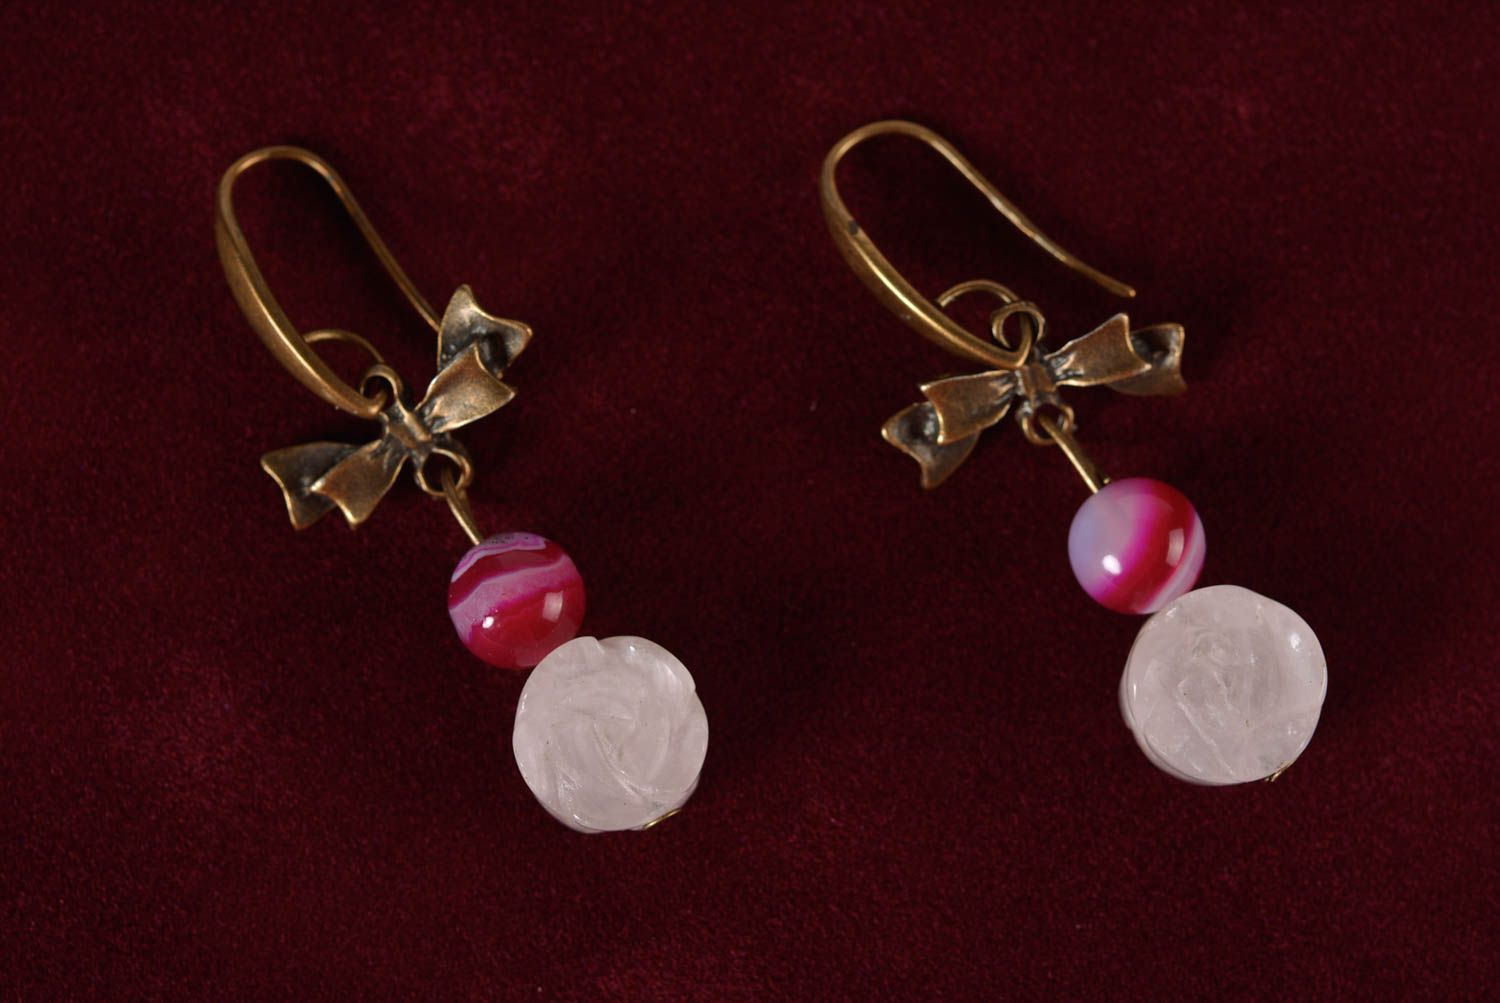 Handmade earrings stone jewelry fashion accessories dangling earrings cool gifts photo 1